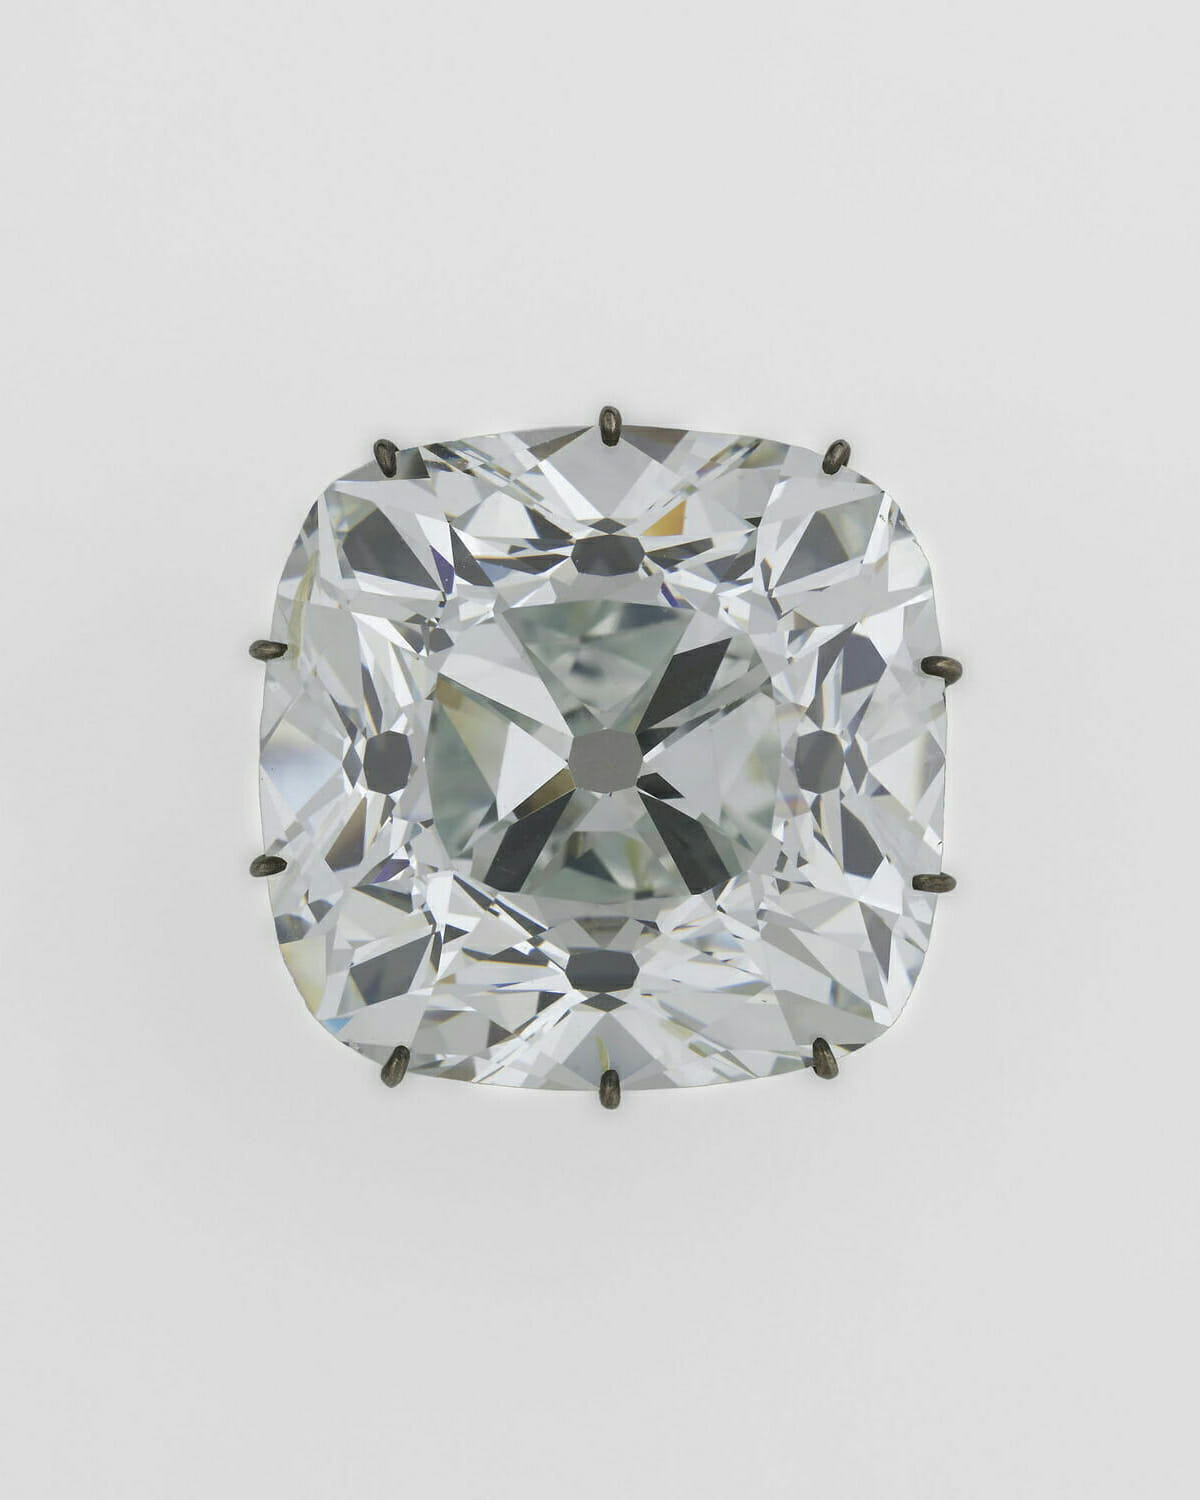 regent diamond auction